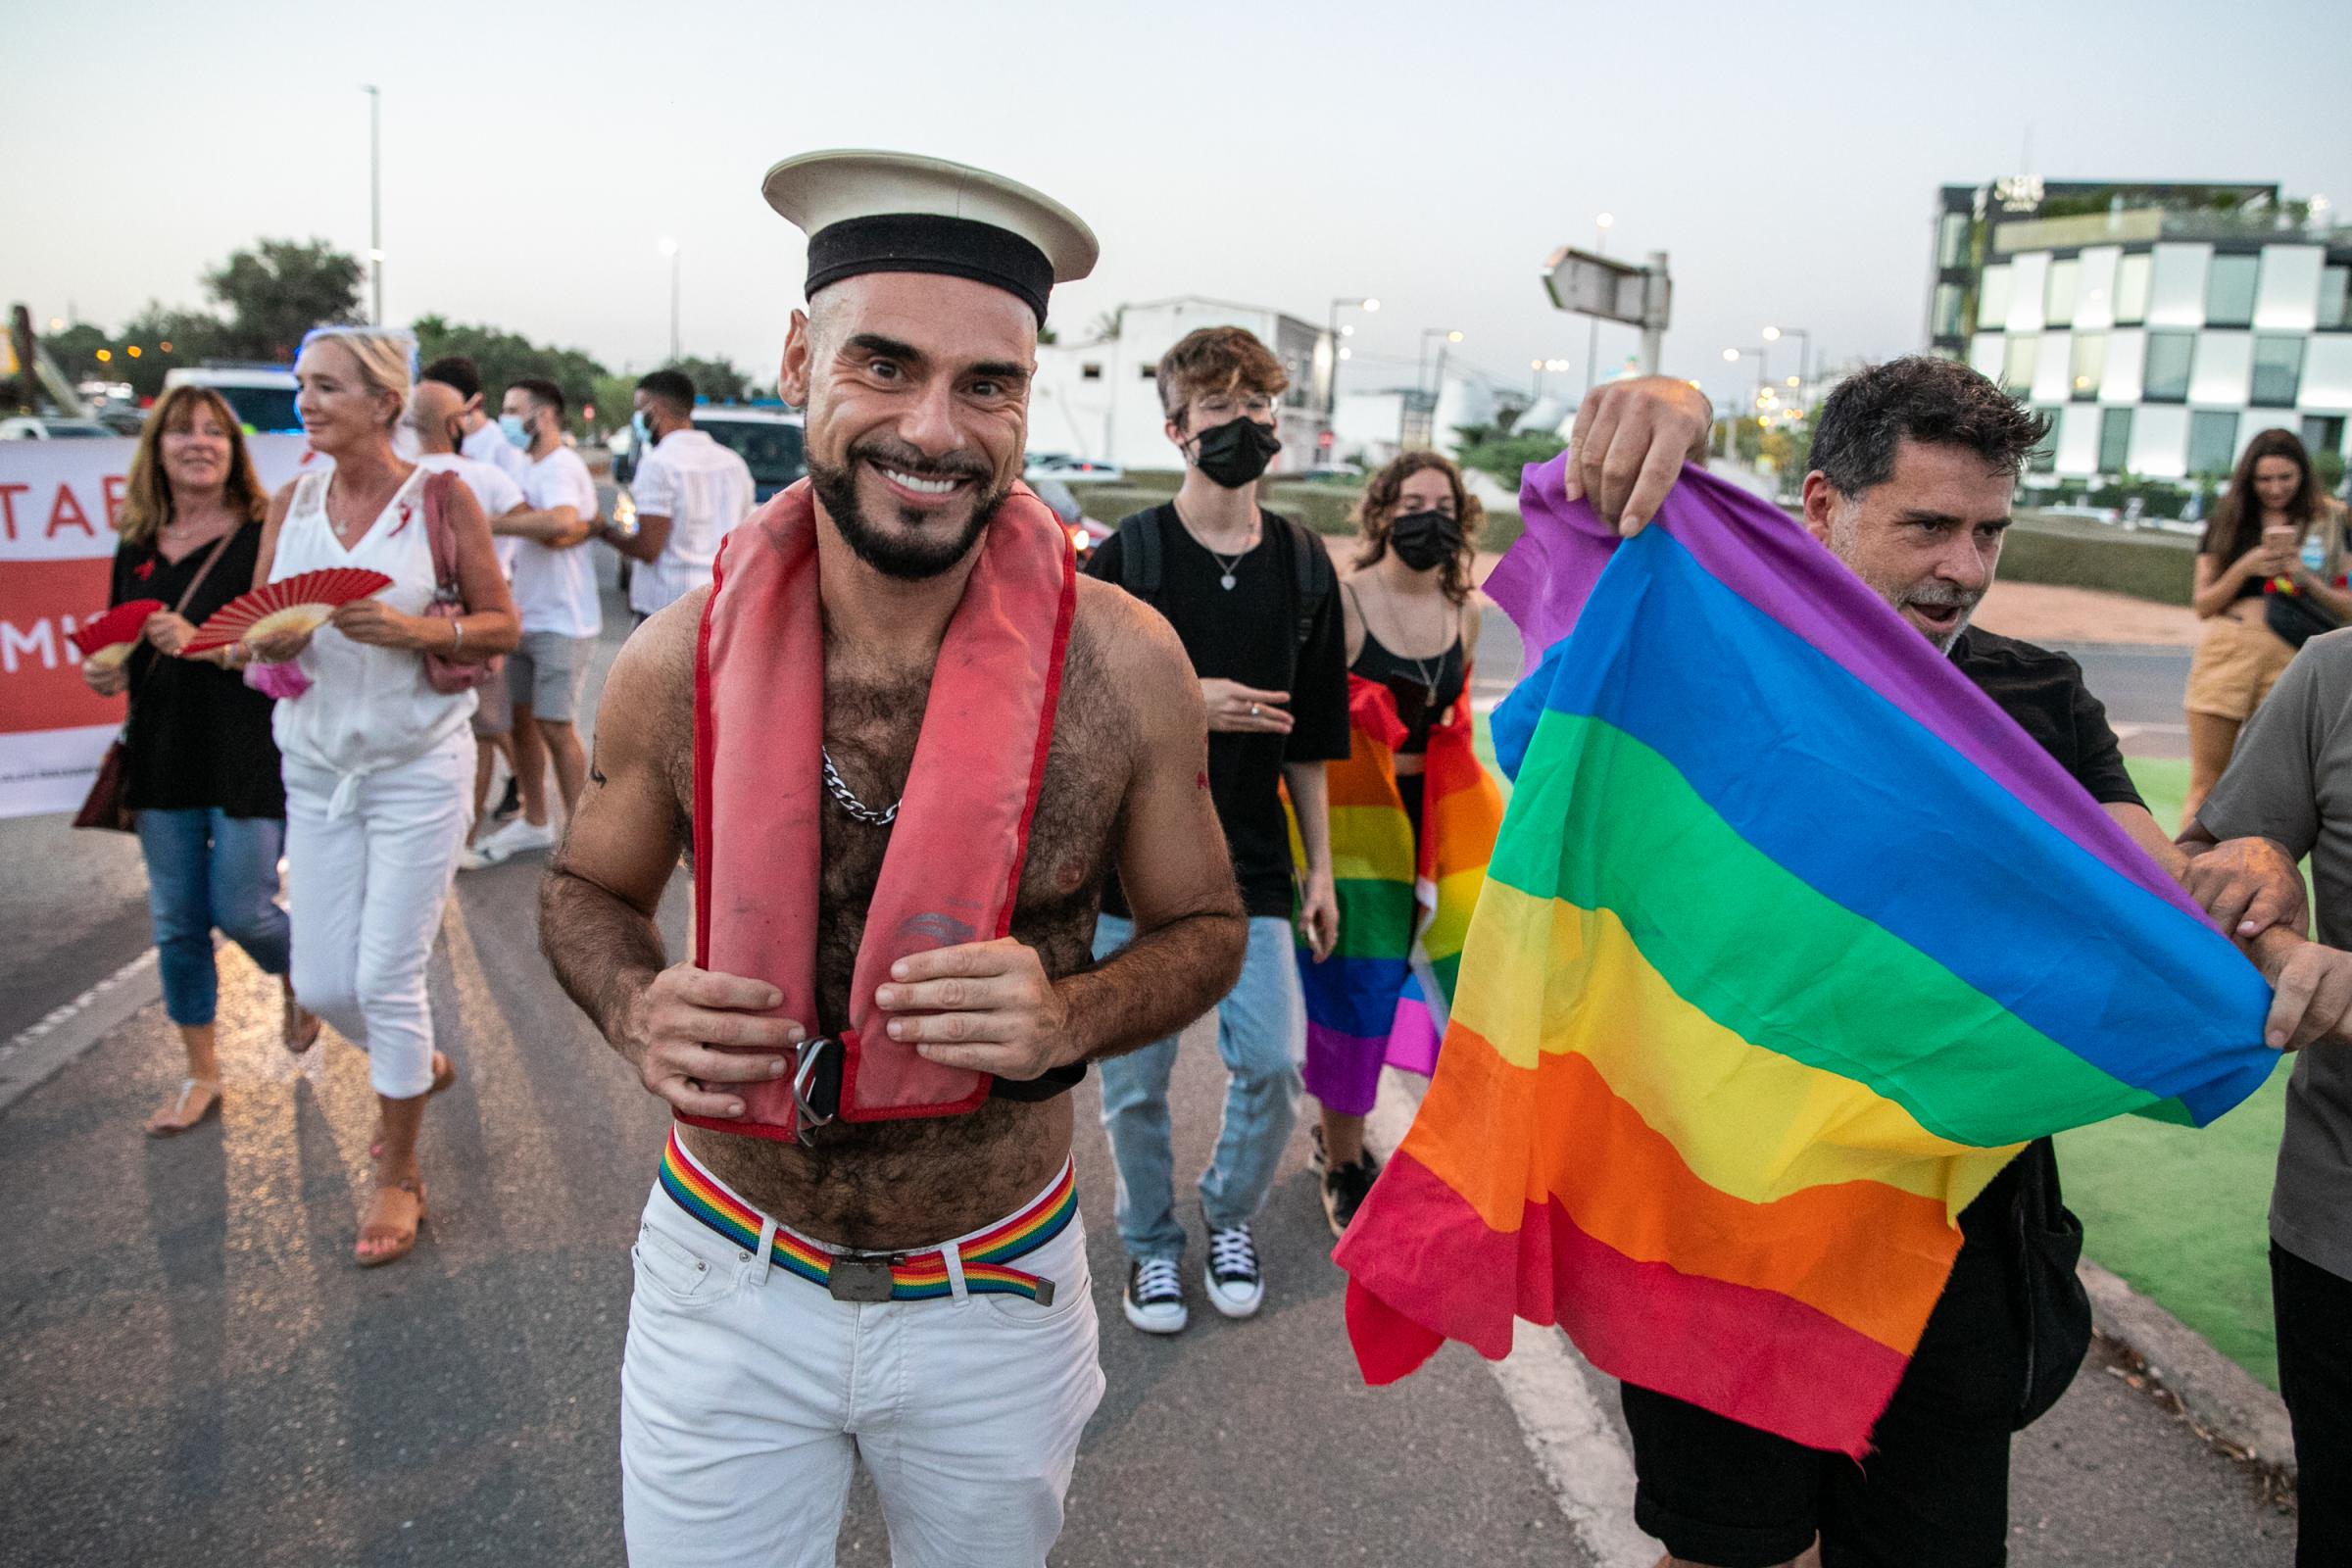 Gay Pride Takes Place In Ibiza - IBIZA, SPAIN - SEPTEMBER 17: Participants enjoy gay pride...